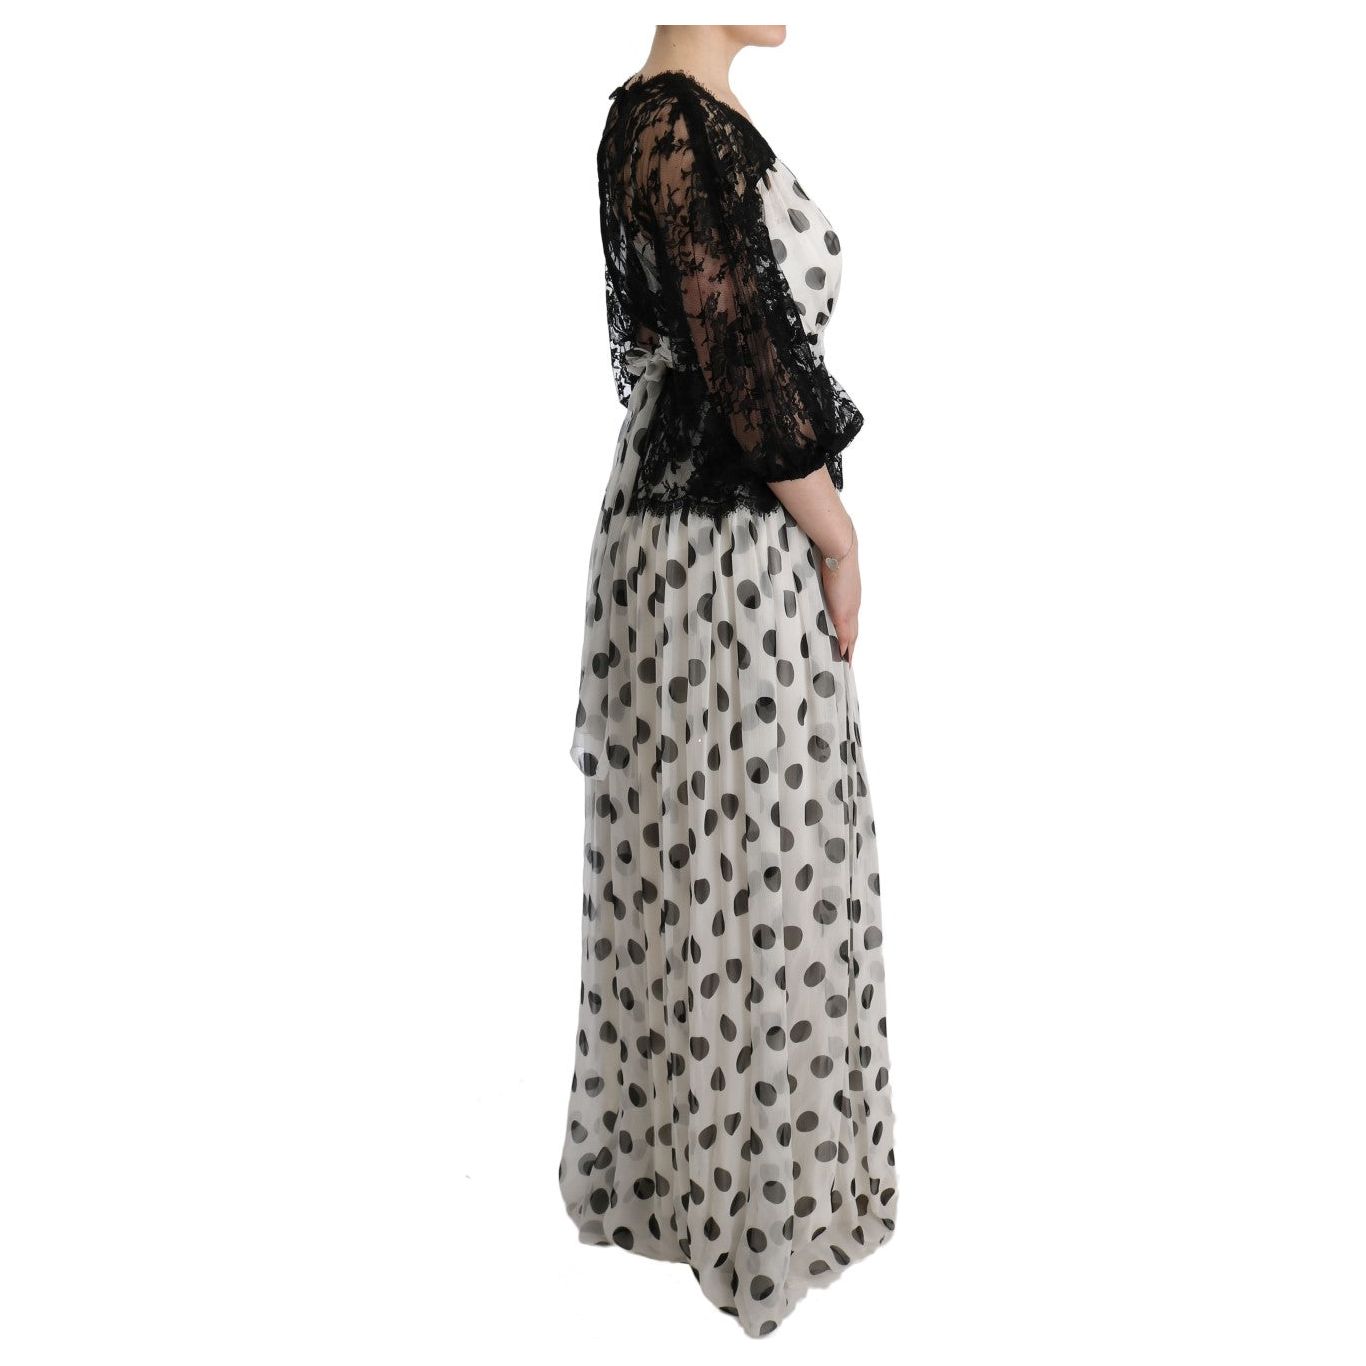 Dolce & Gabbana Elegant Polka Dotted Full Length Gown black-white-polka-dotted-floral-dress 445584-black-white-polka-dotted-floral-dress-3.jpg